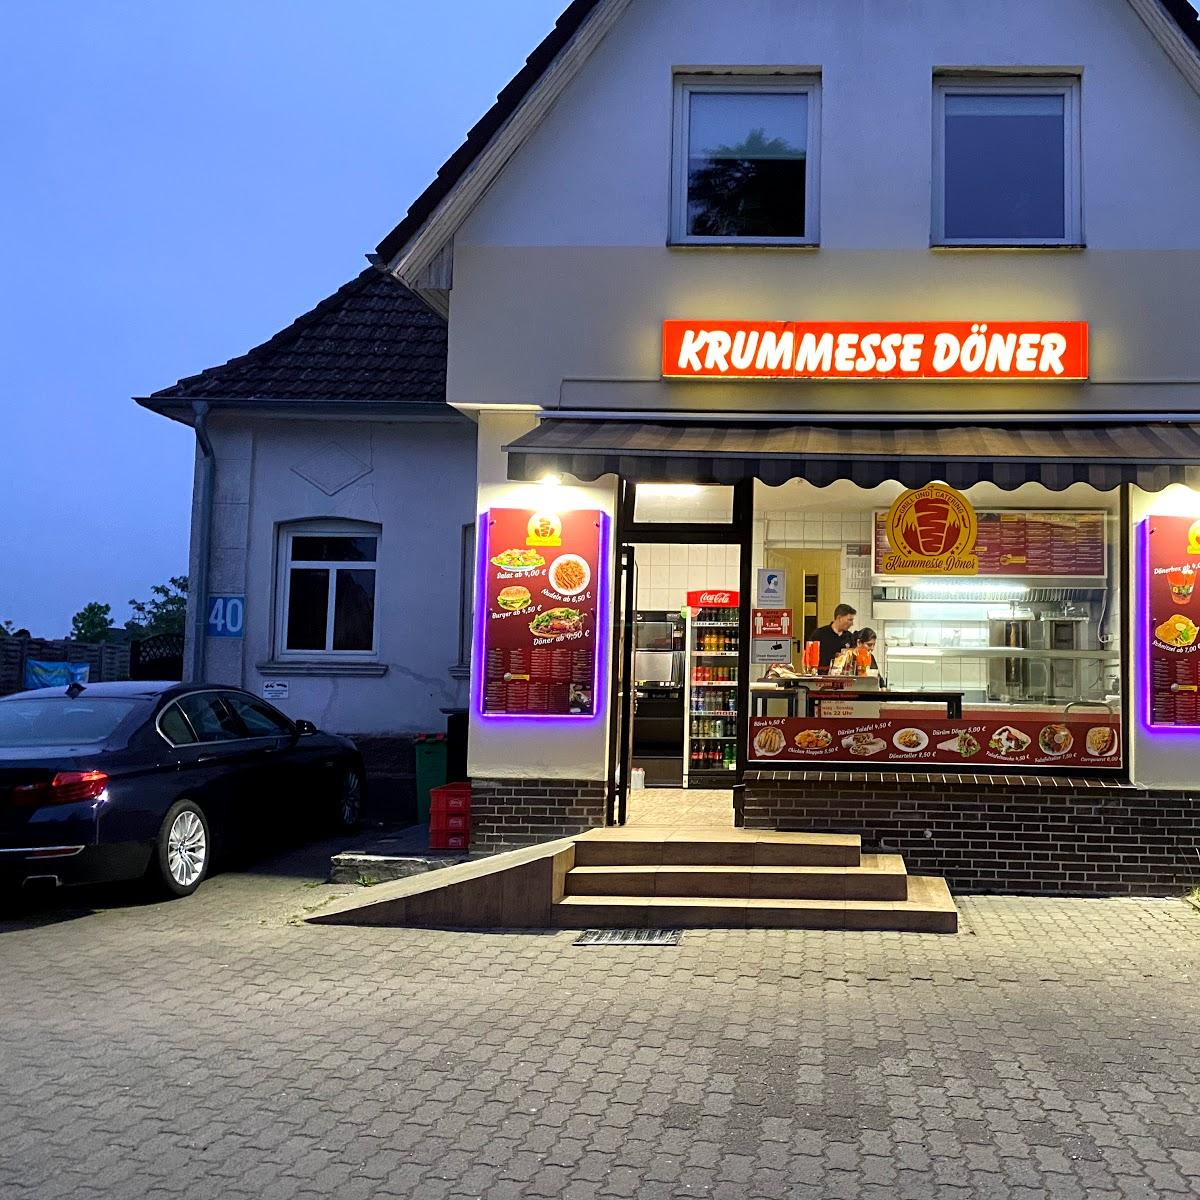 Restaurant "Döner" in Krummesse